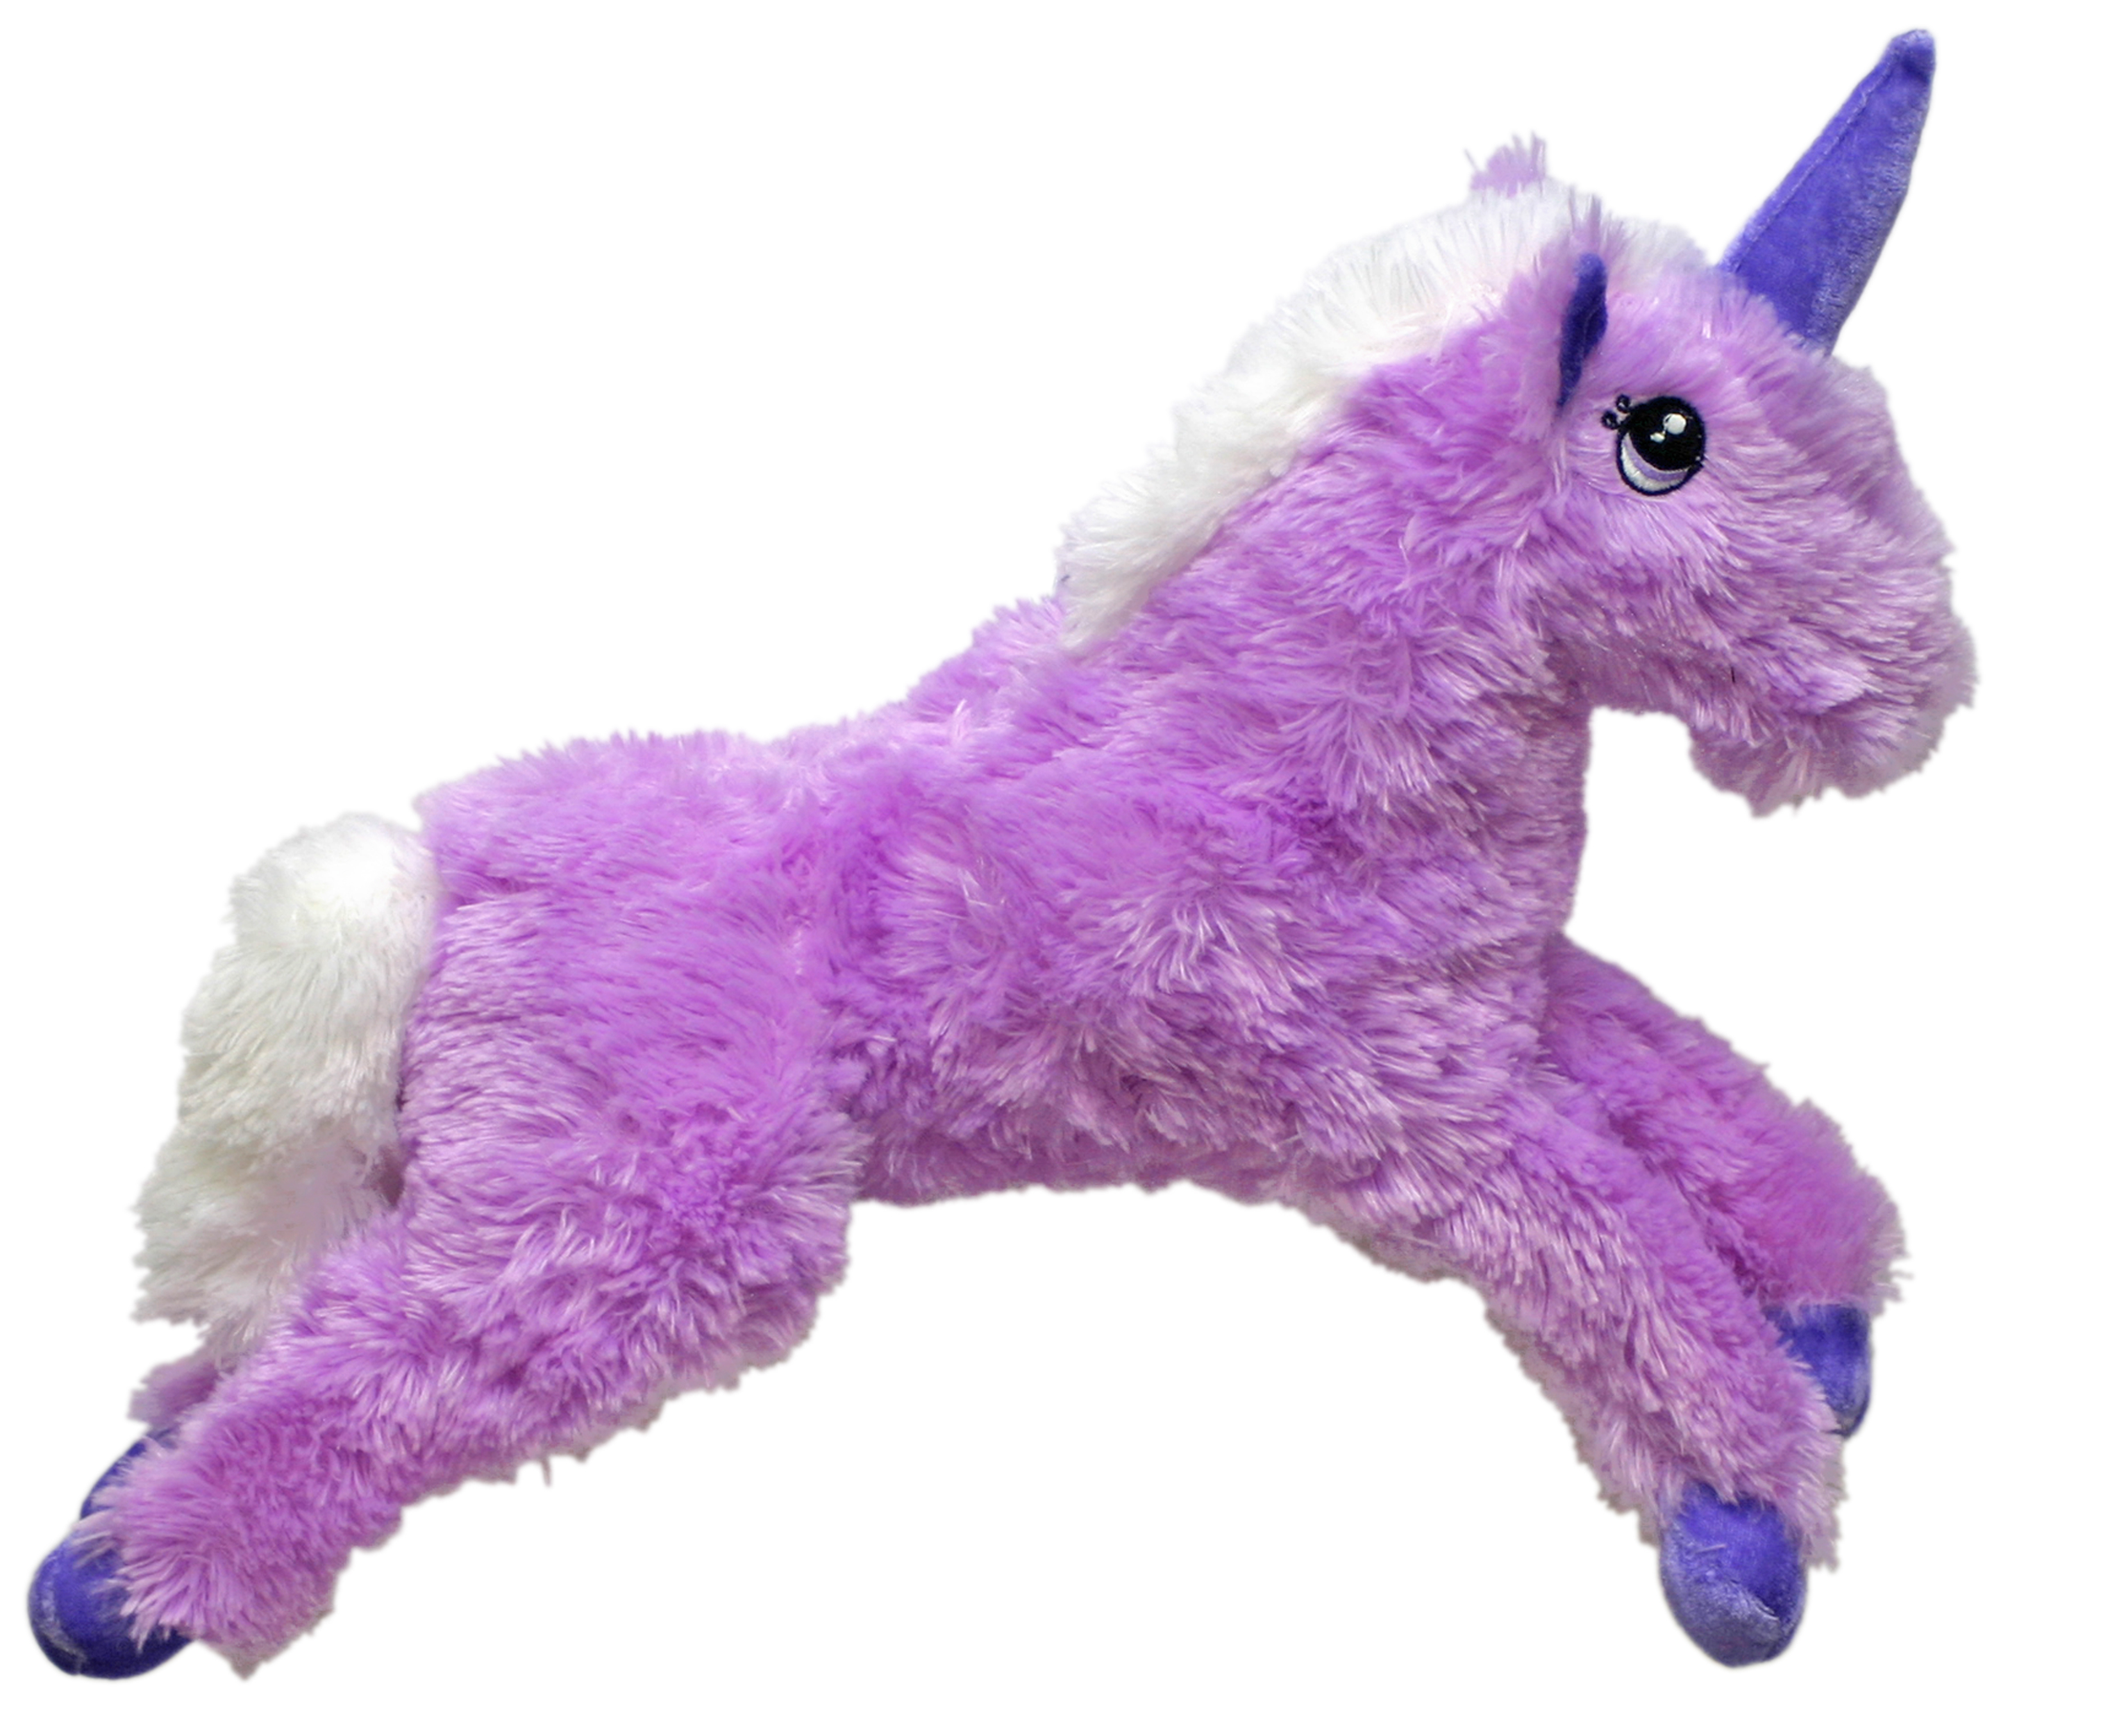 Whimsy & Charm Valentine's Day Sweatheart Love 22" Unicorn Stuffed Animal Plush Toy Soft & Fluffy - Purple - image 1 of 6